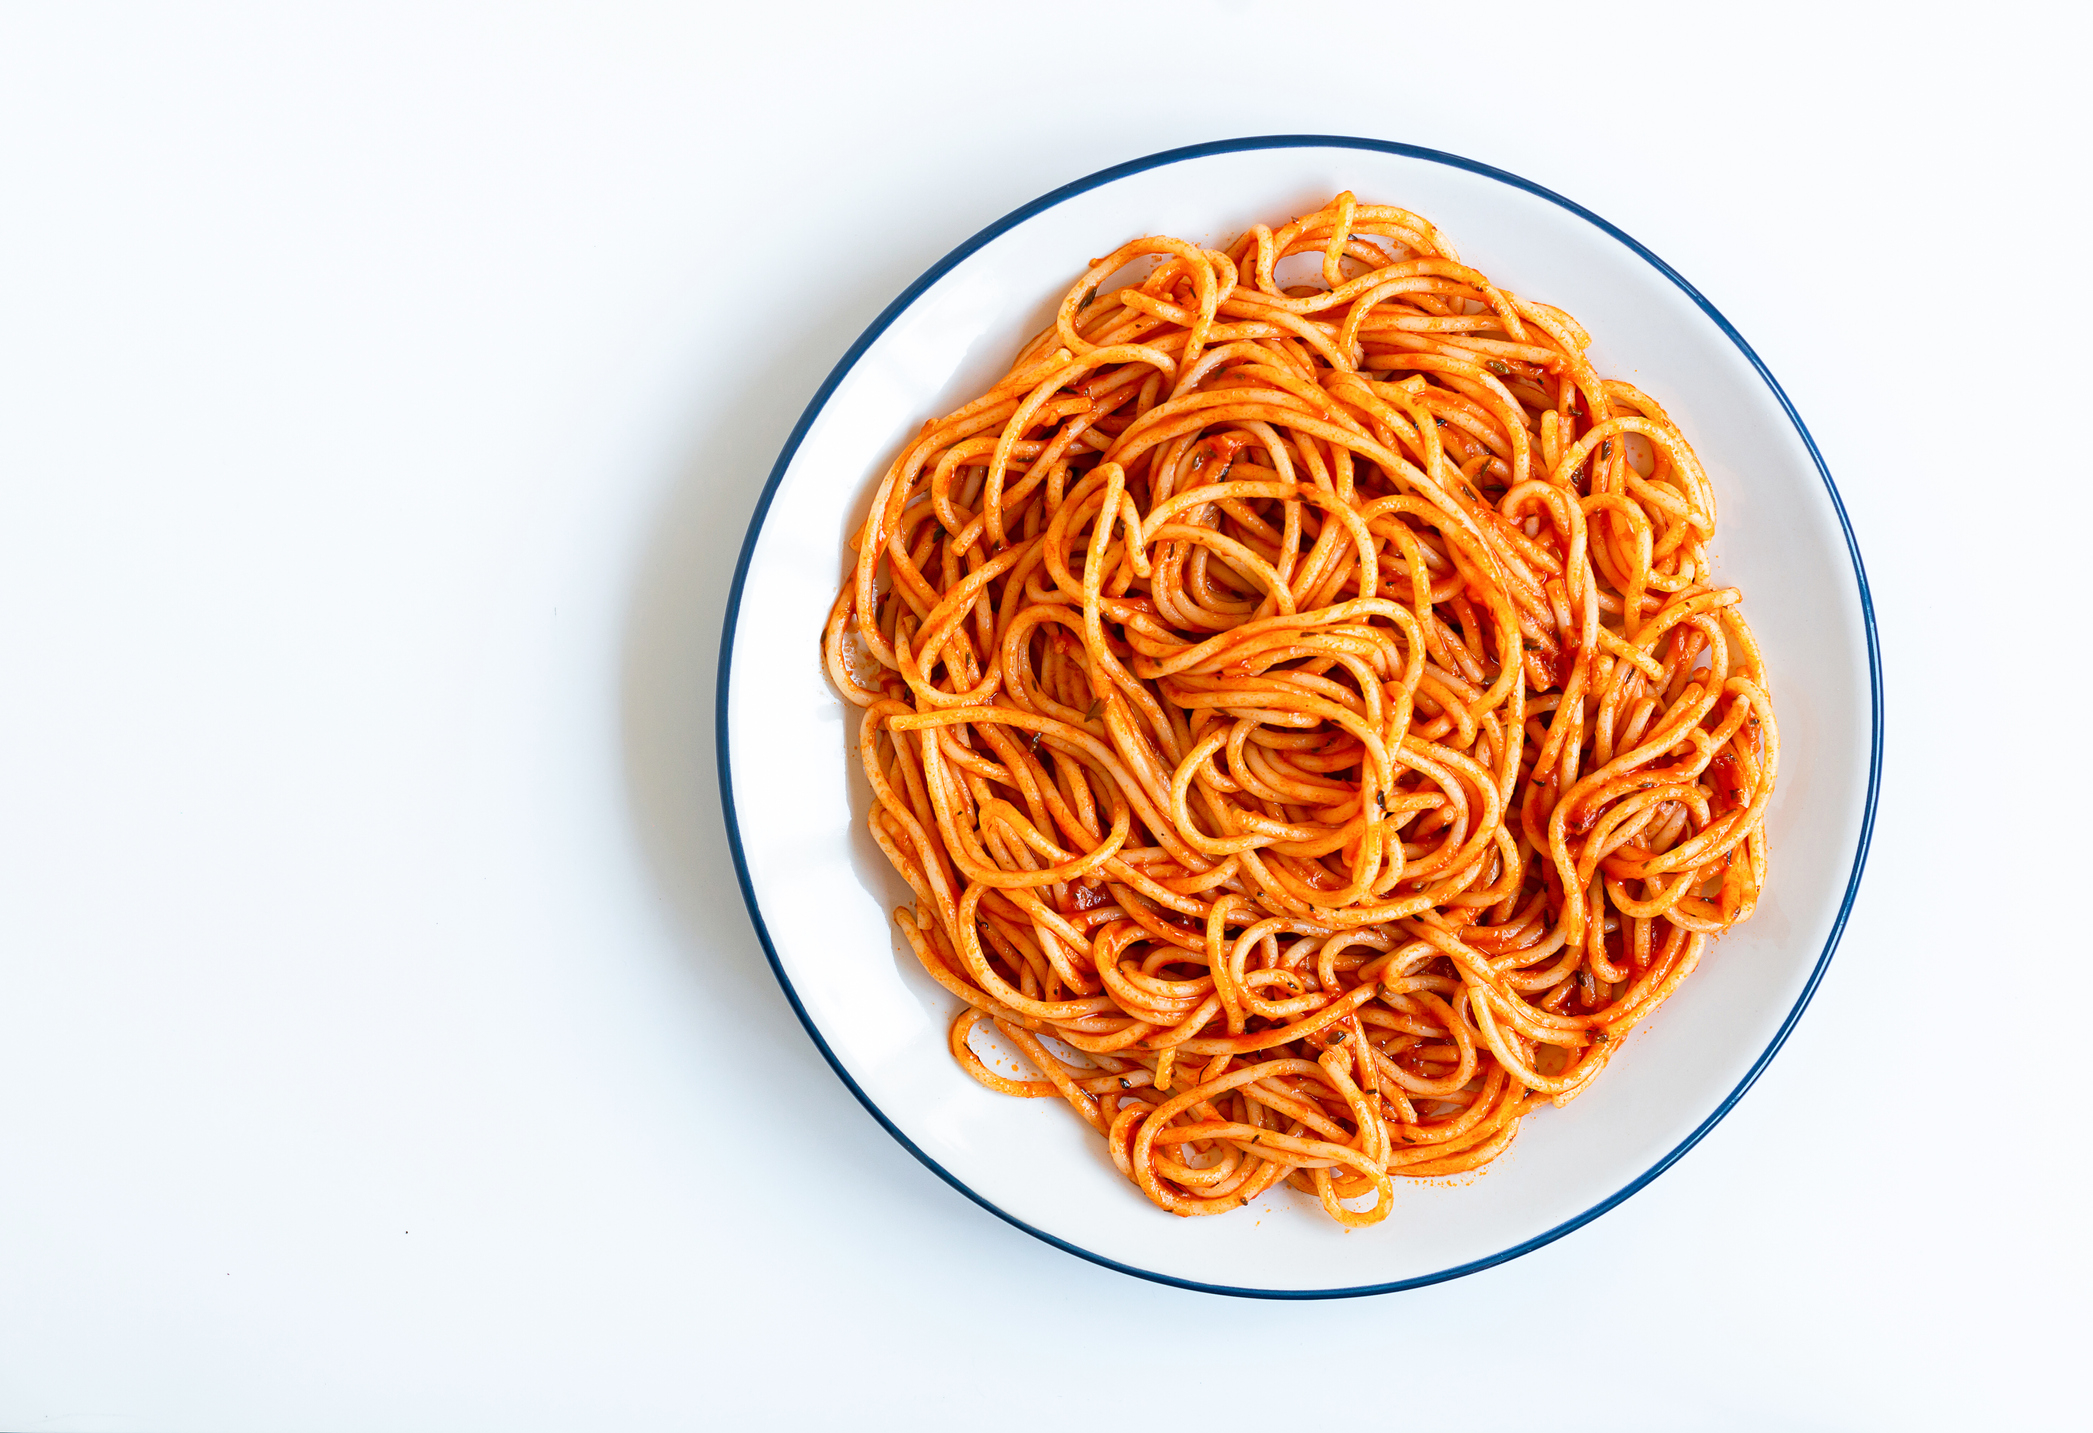 A bowl of spaghetti